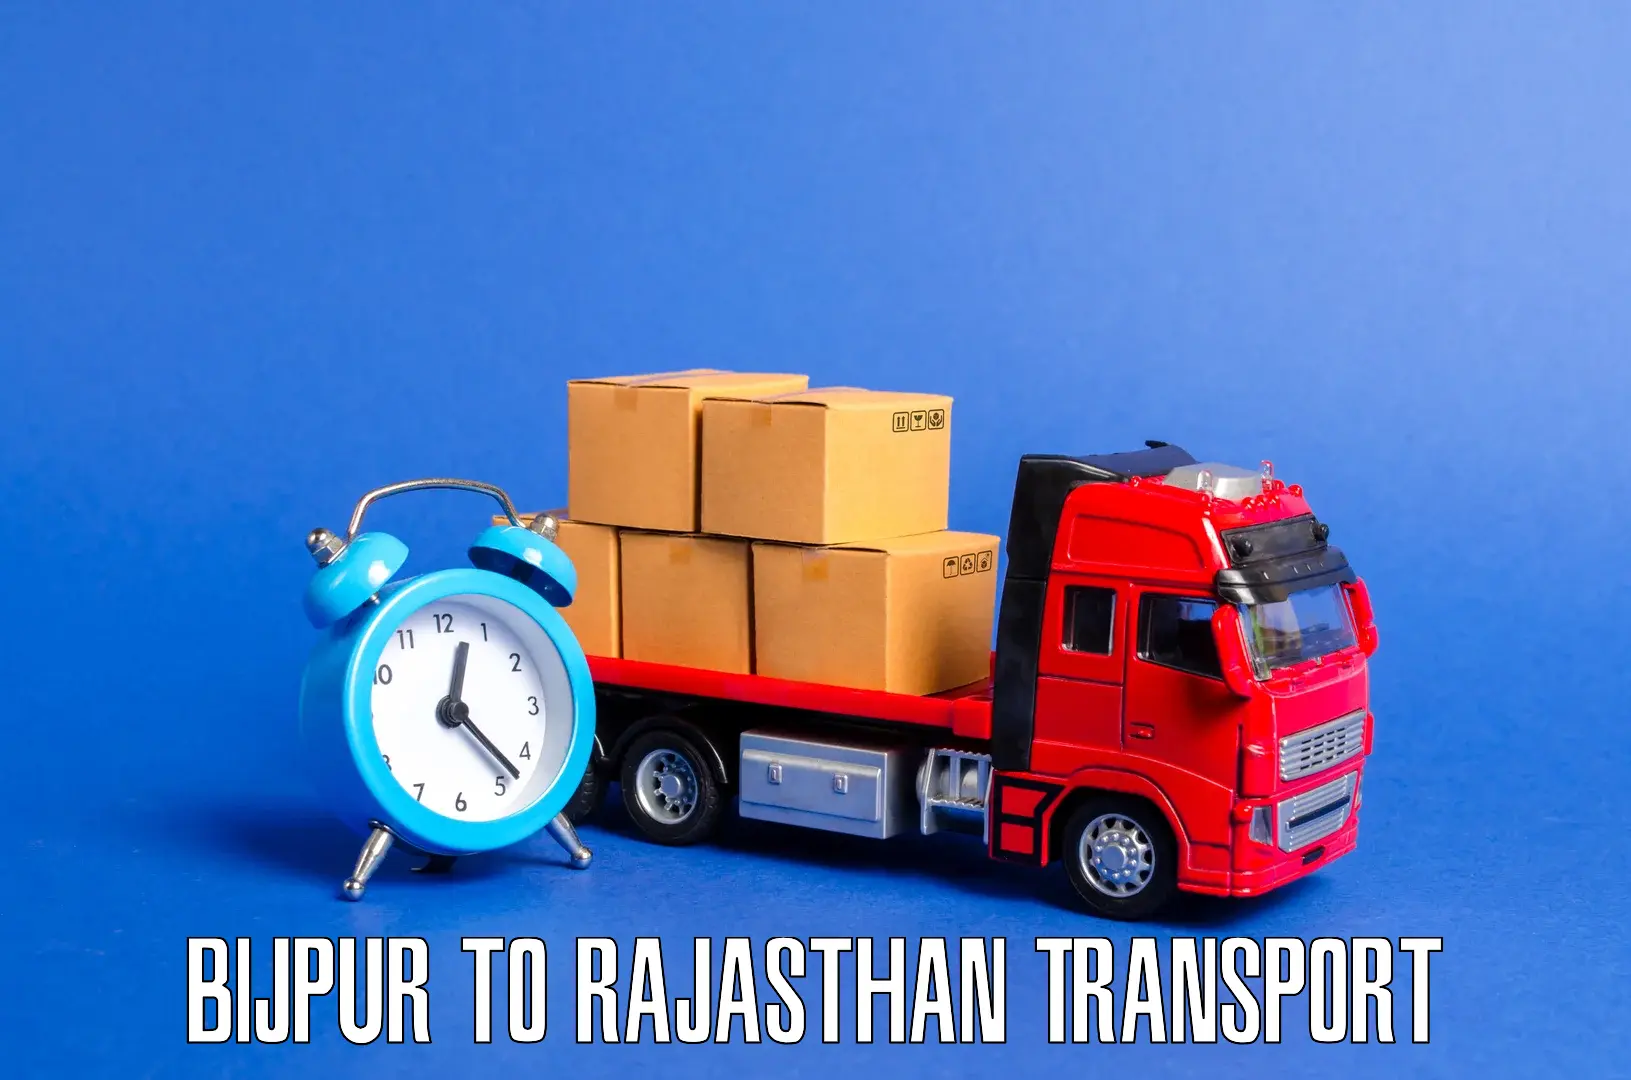 Transport in sharing Bijpur to Bansur